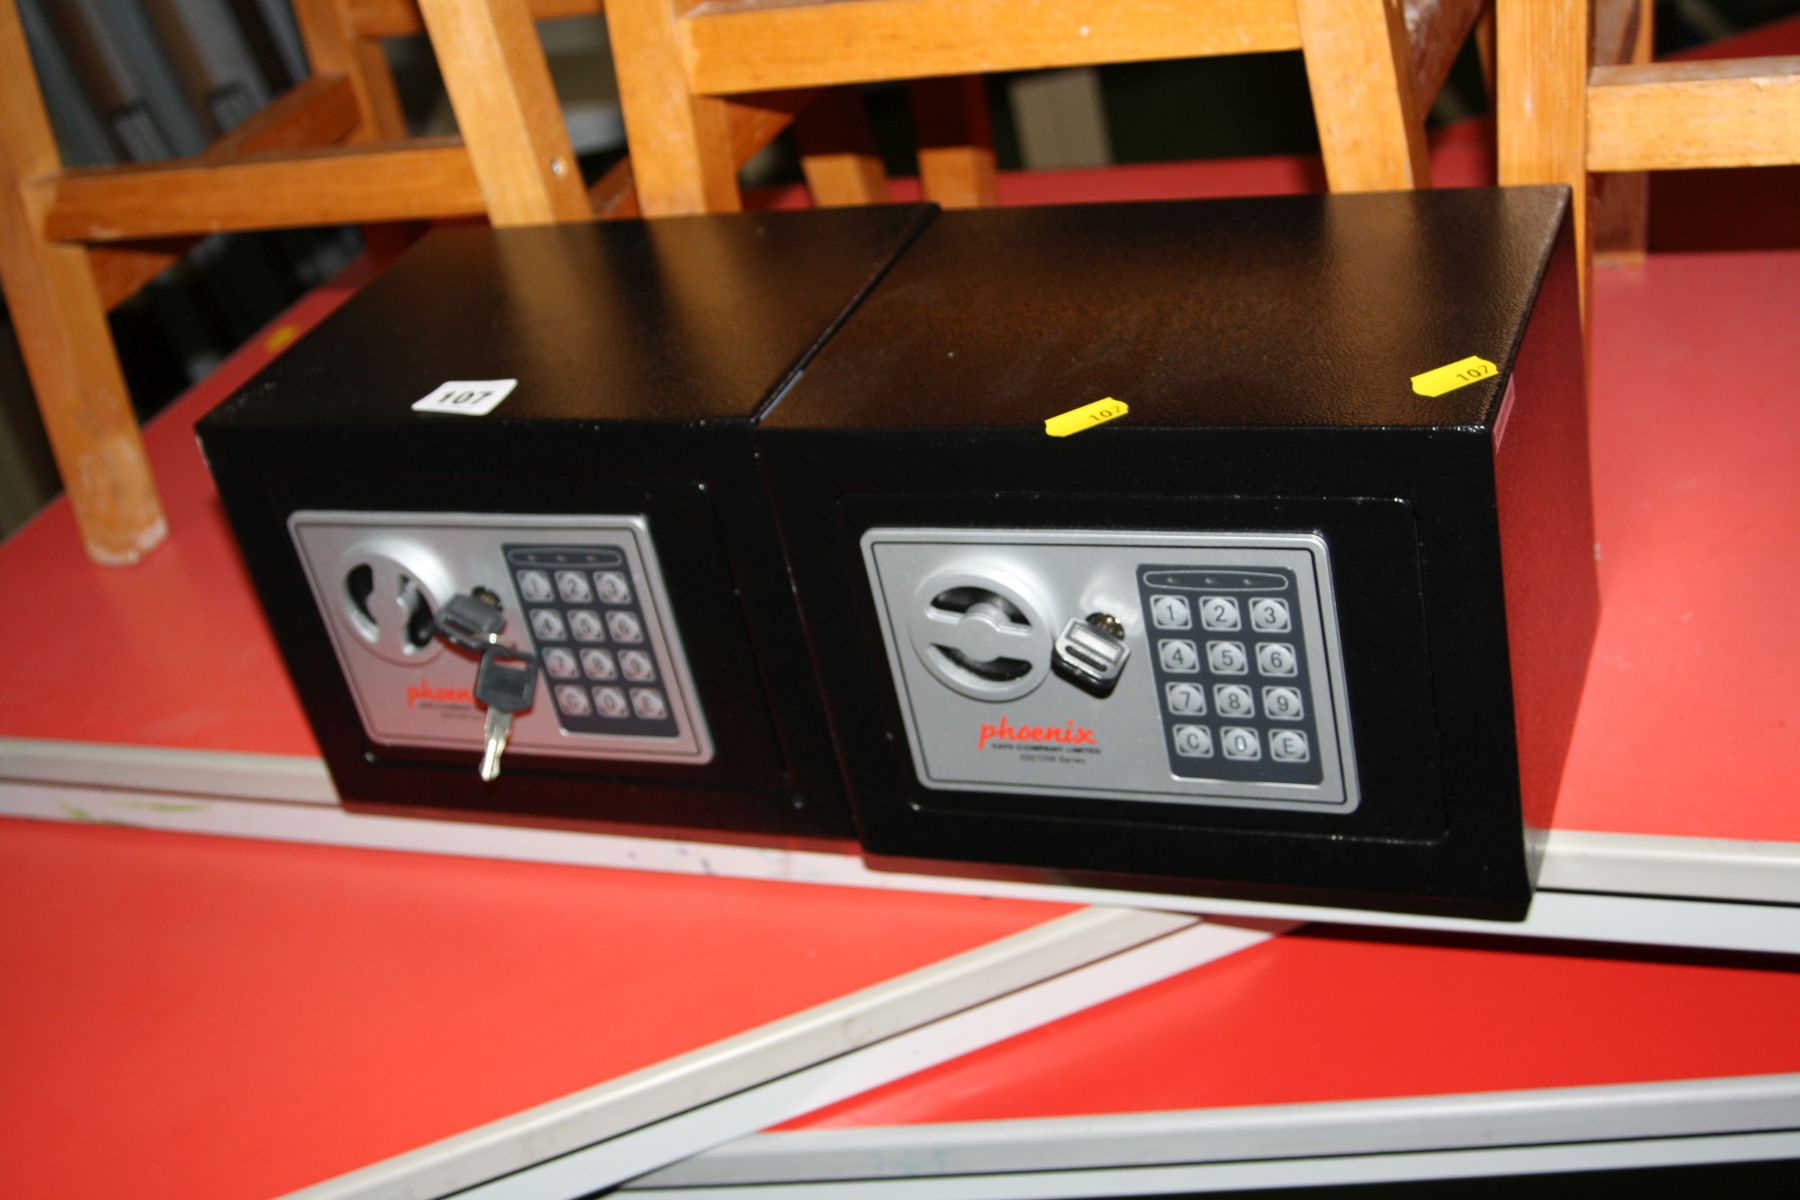 TWO BLACK PHEONIX PERSONAL ELECTRONIC SAFES, 23x17x17cm with three keys